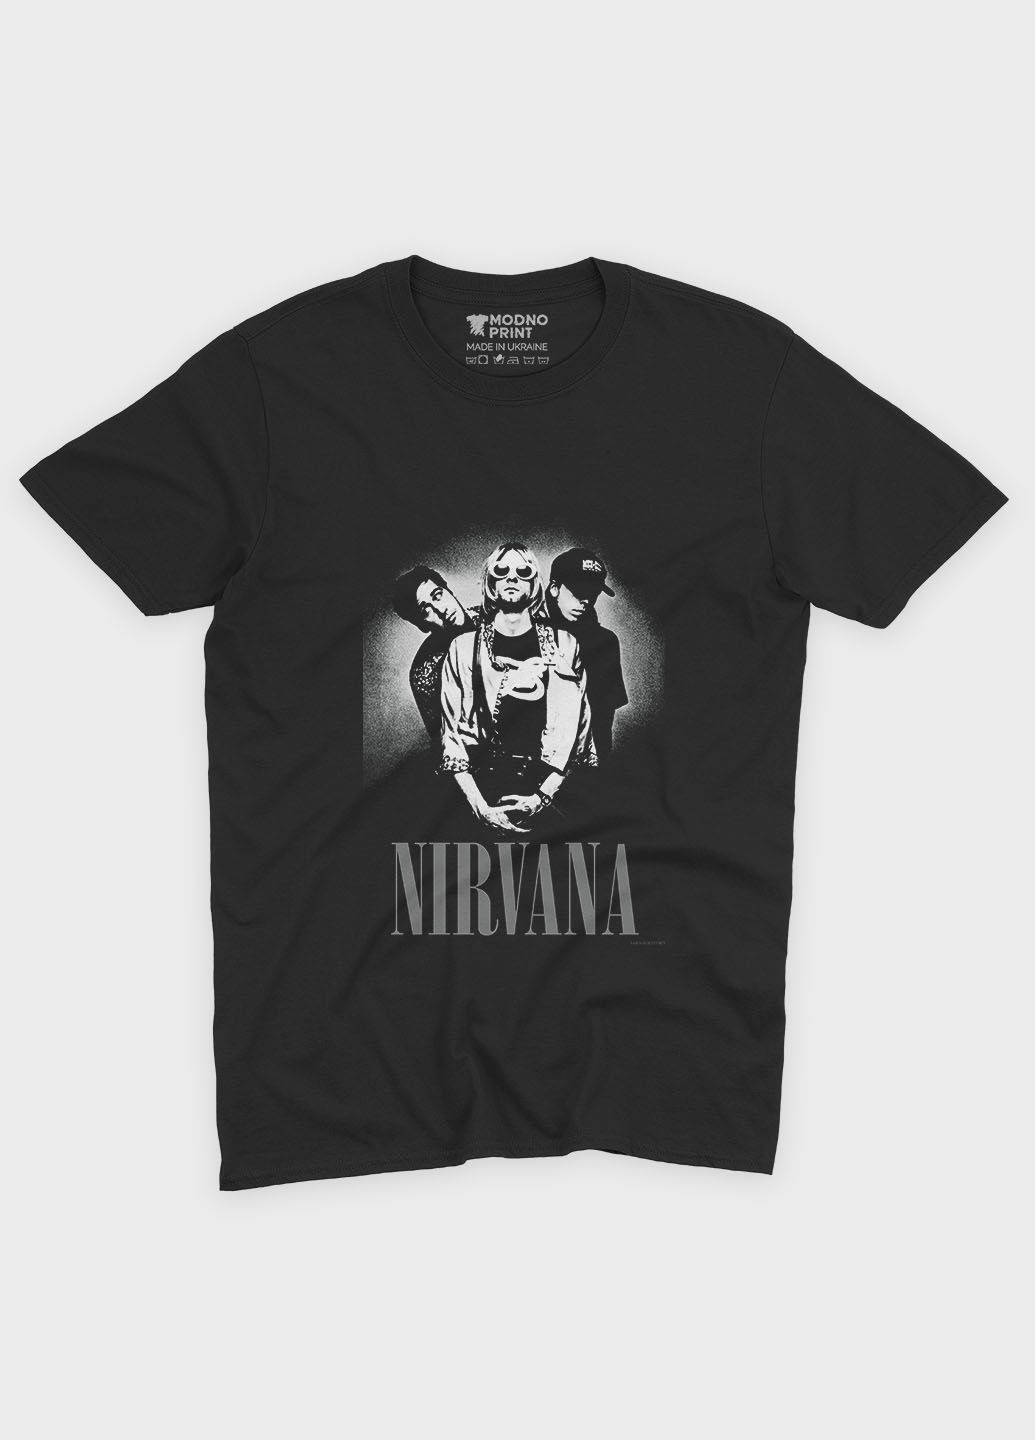 Черная мужская футболка с рок-принтом "nirvana" (ts001-4-bl-004-2-269) Modno